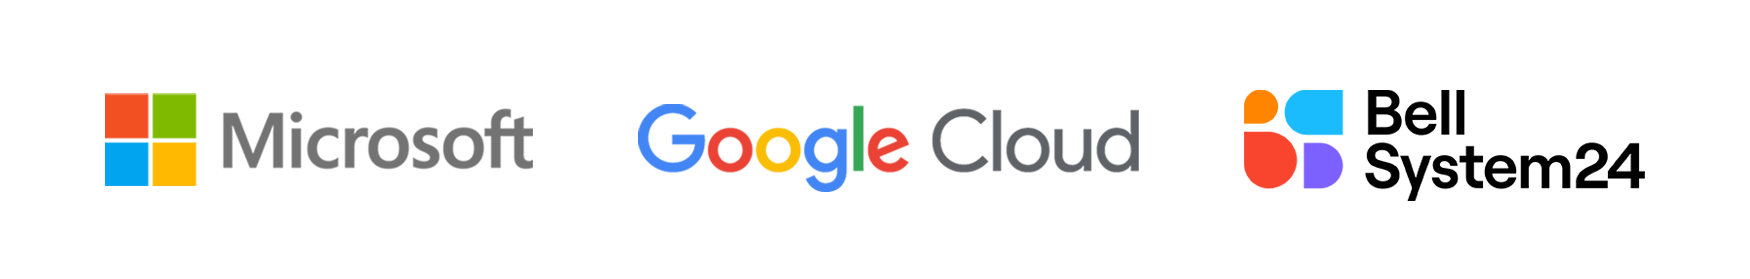 Microsoft / Google Cloud / BELLSYSTEM24 ロゴ